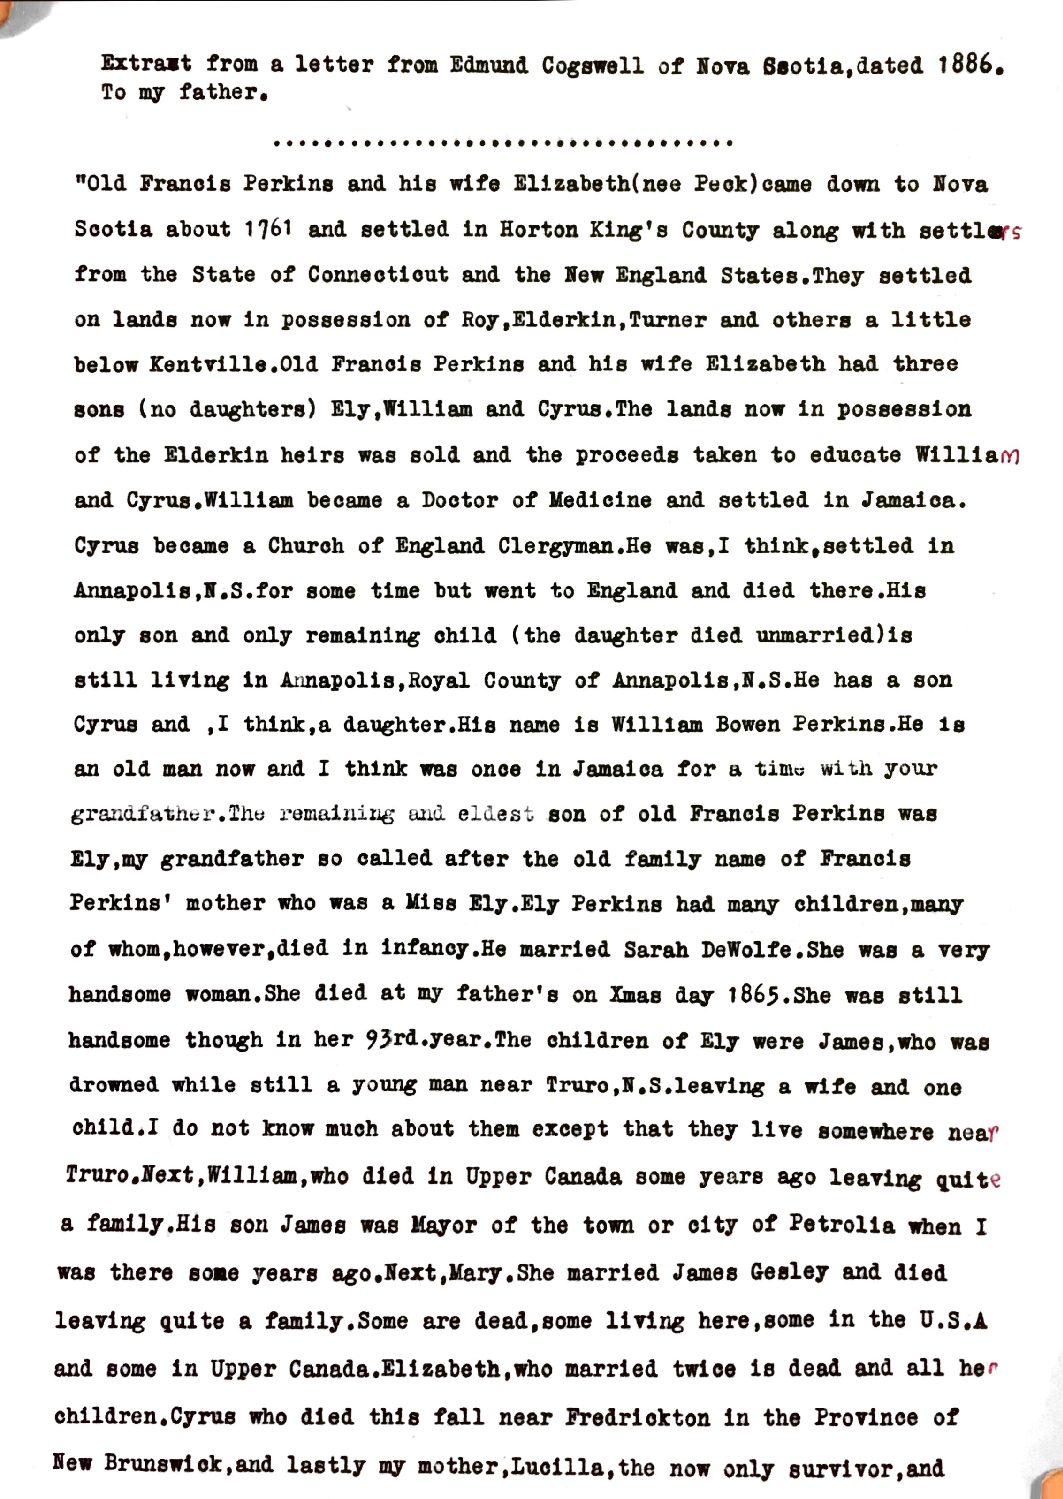 188600304 Transcription of Edmund Cogswell Letter